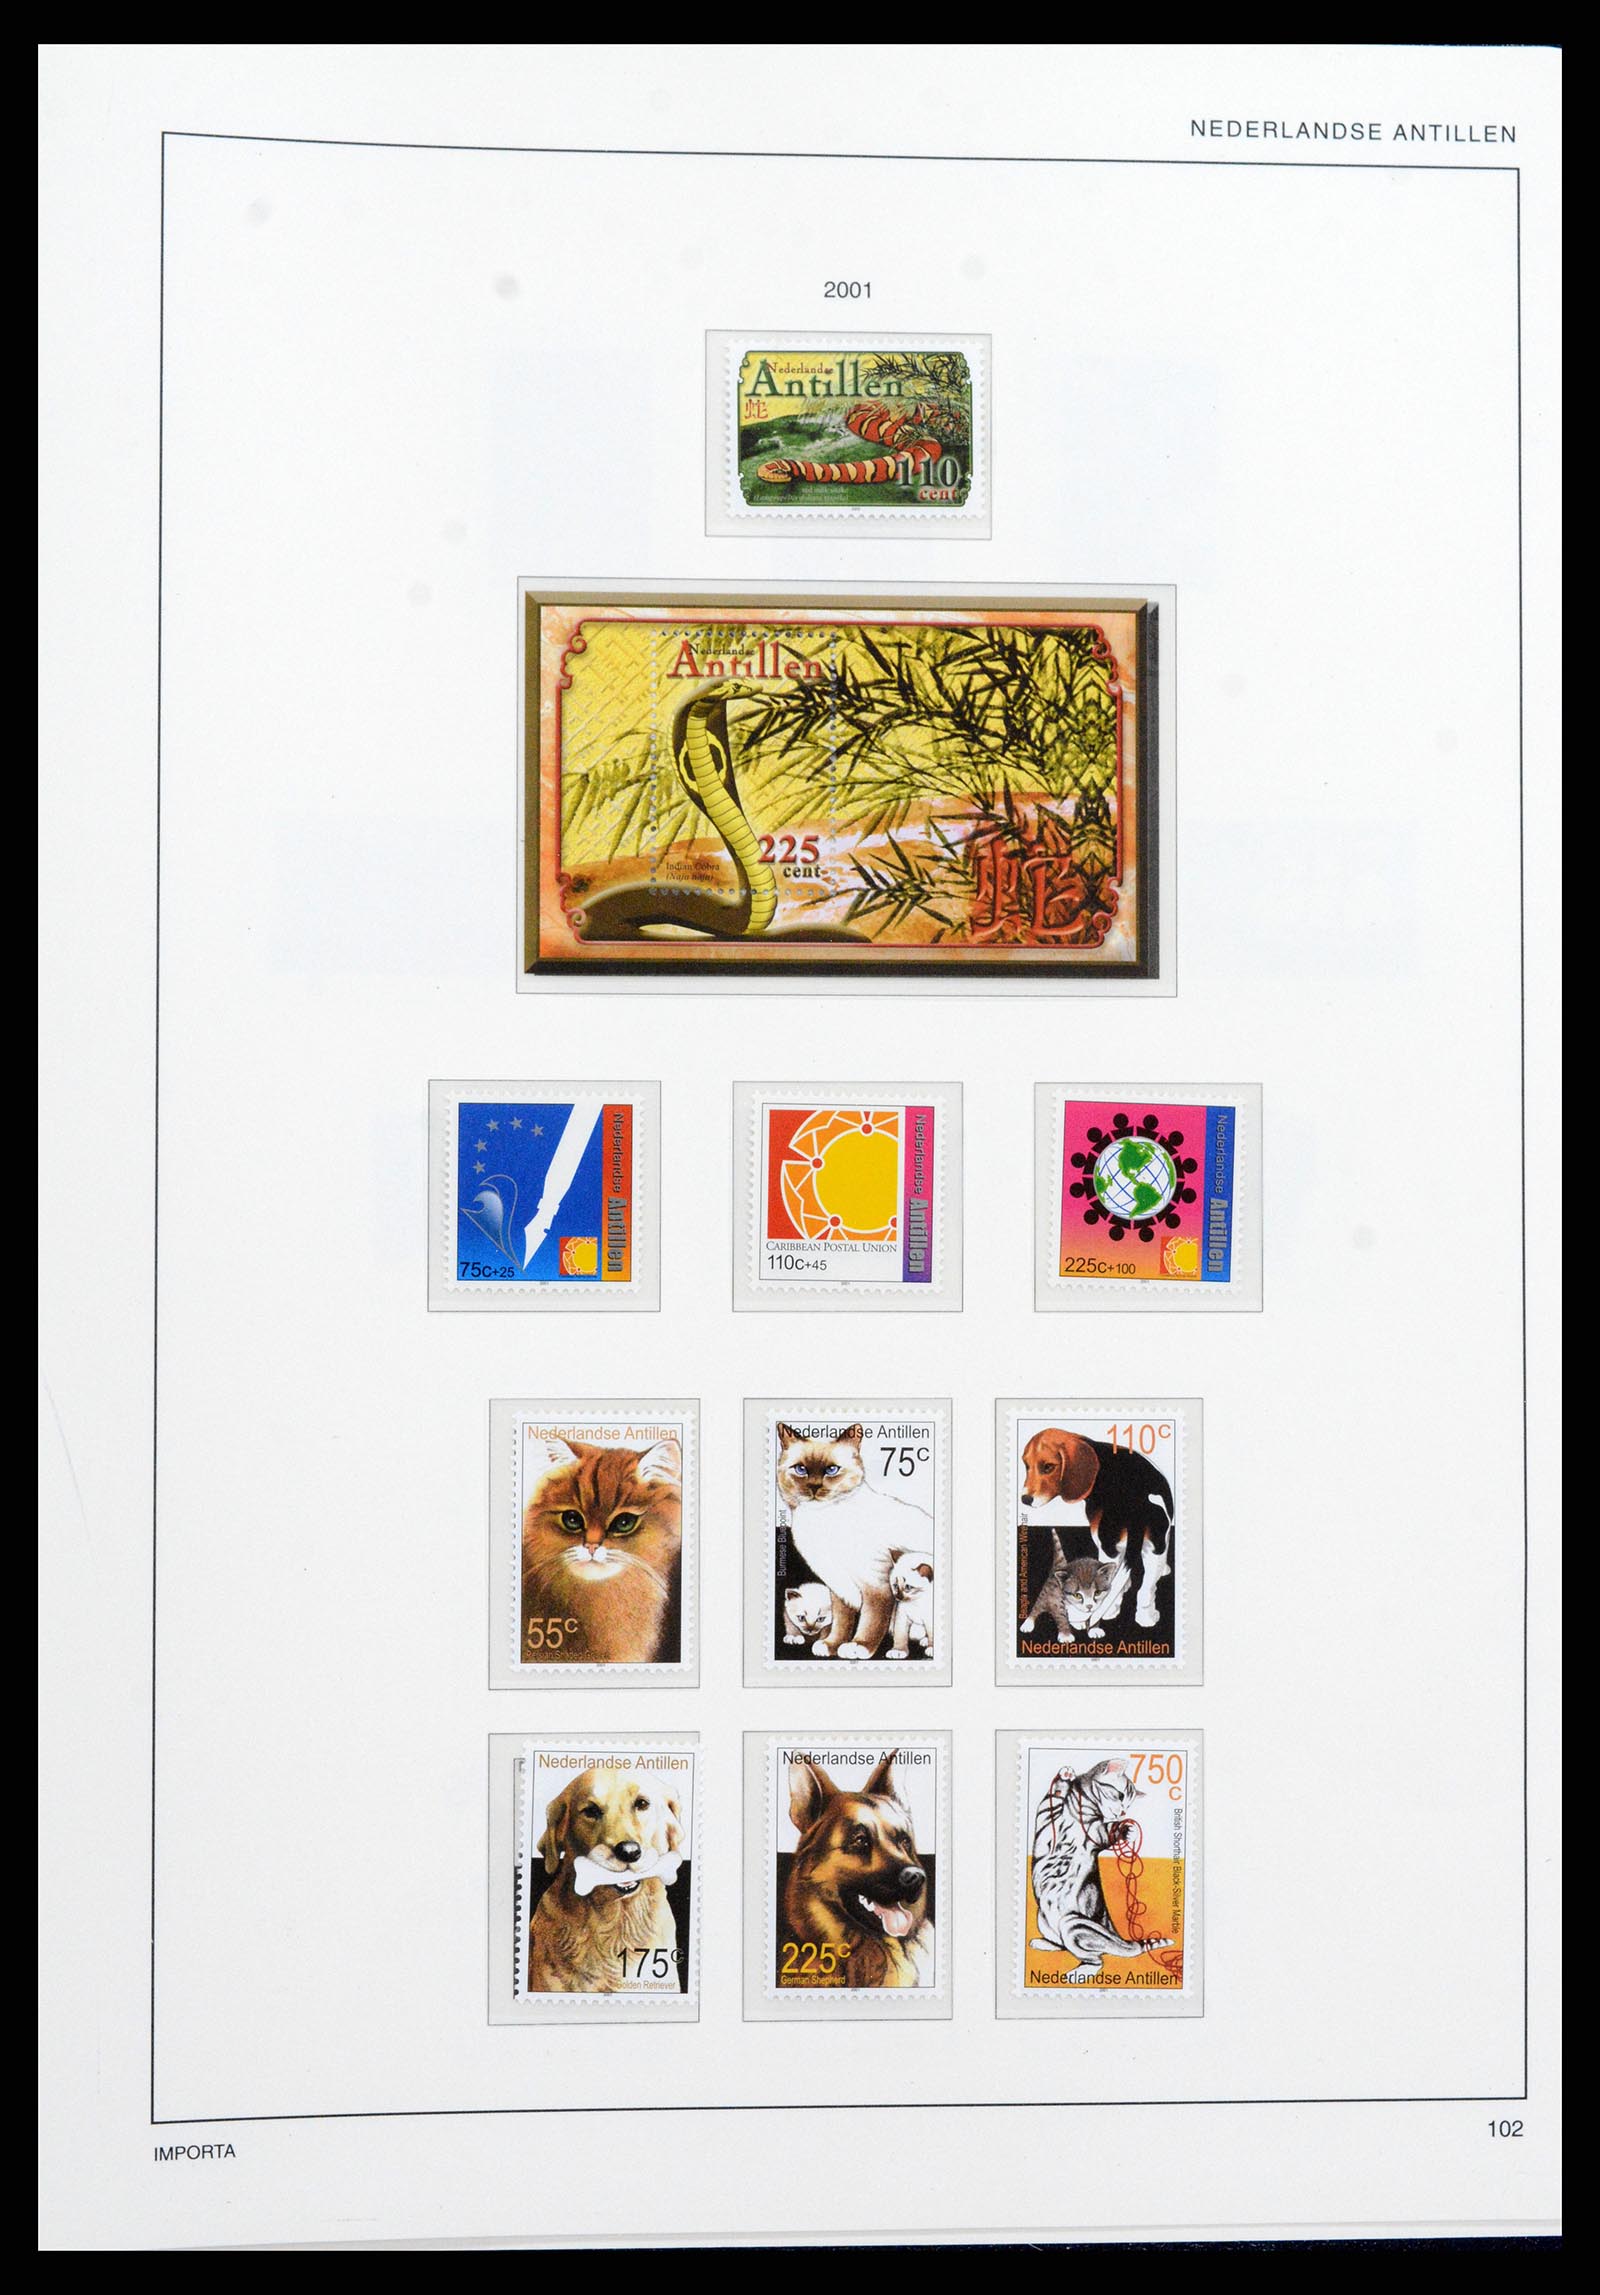 37693 104 - Stamp collection 37693 Netherlands Antilles 1949-2001.